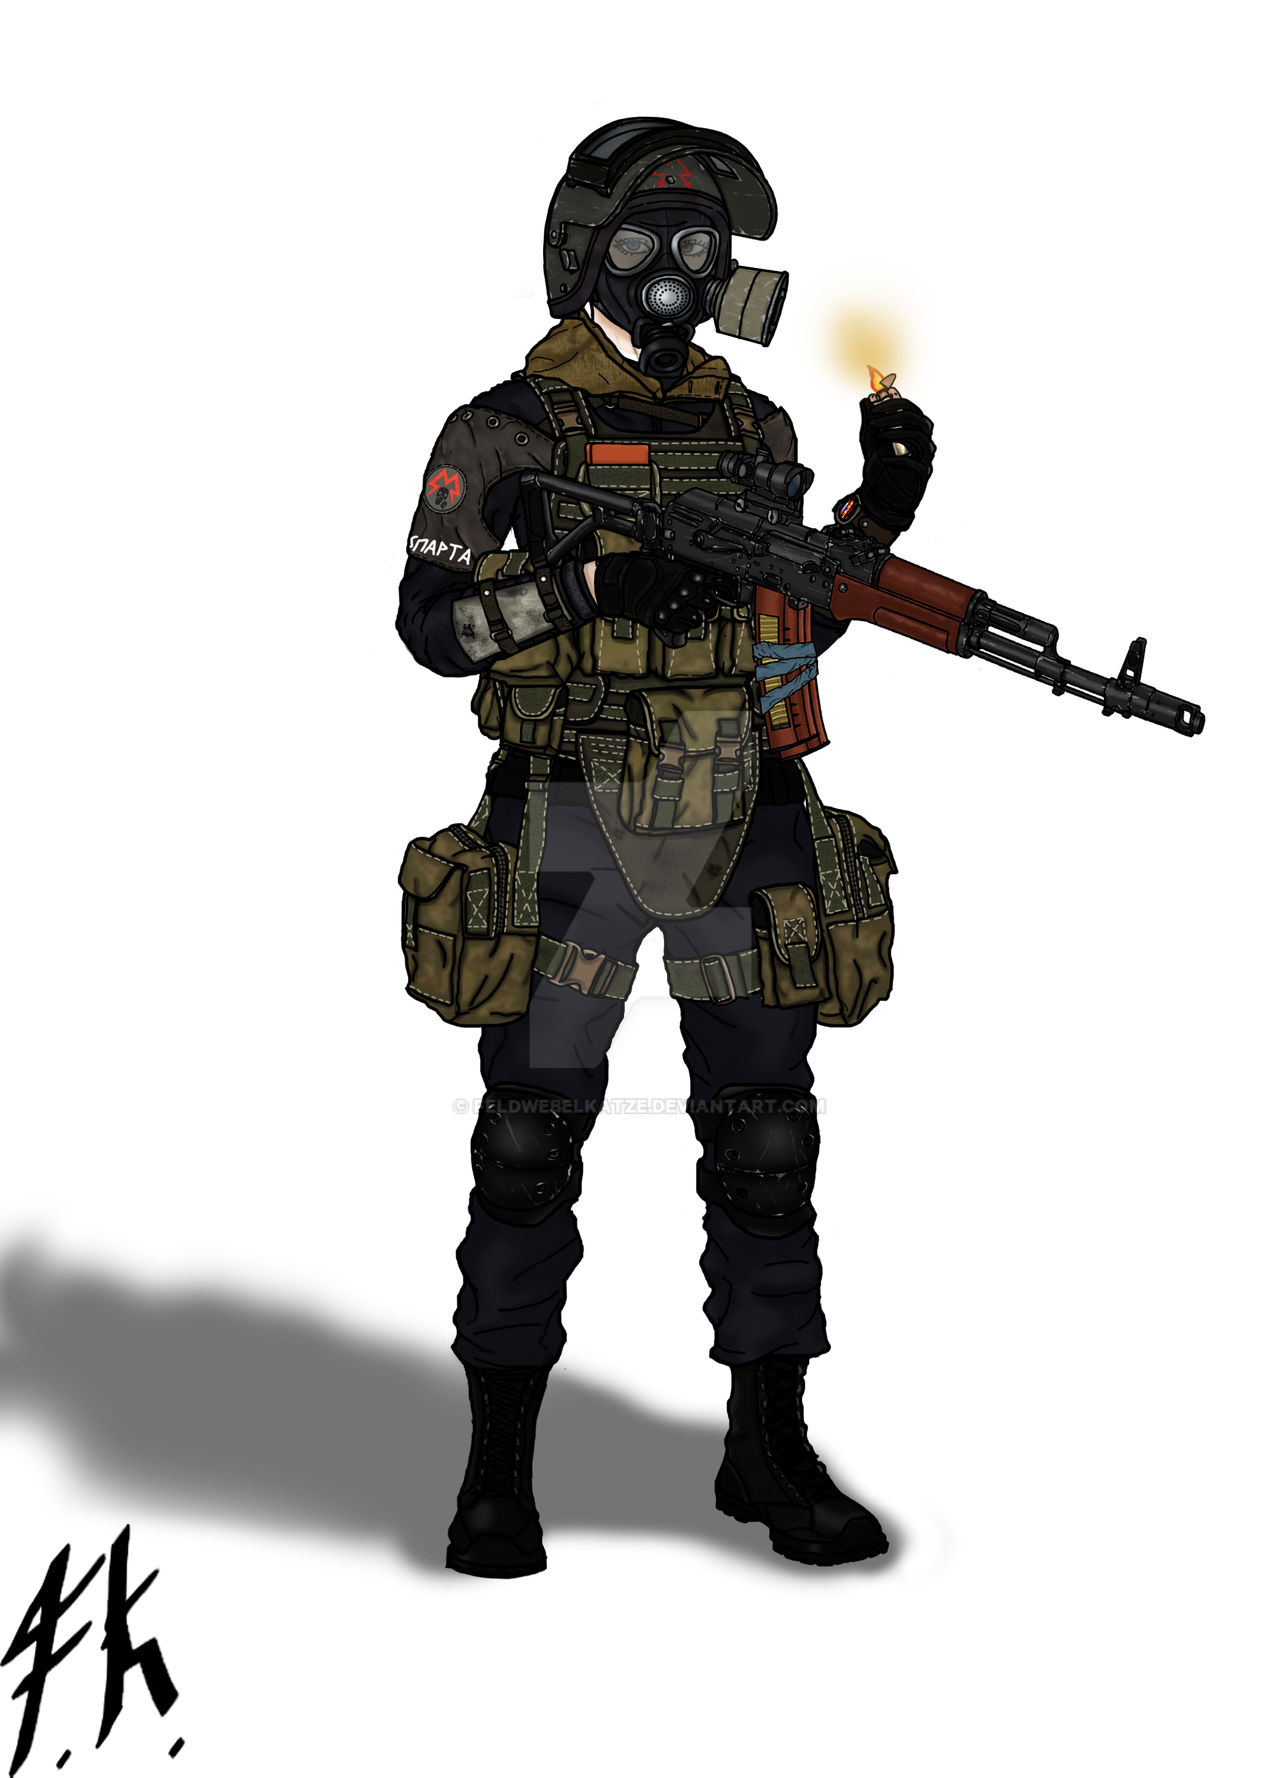 Ranger of the SPARTA Order, Metro 2033 by FeldwebelKatze on DeviantArt